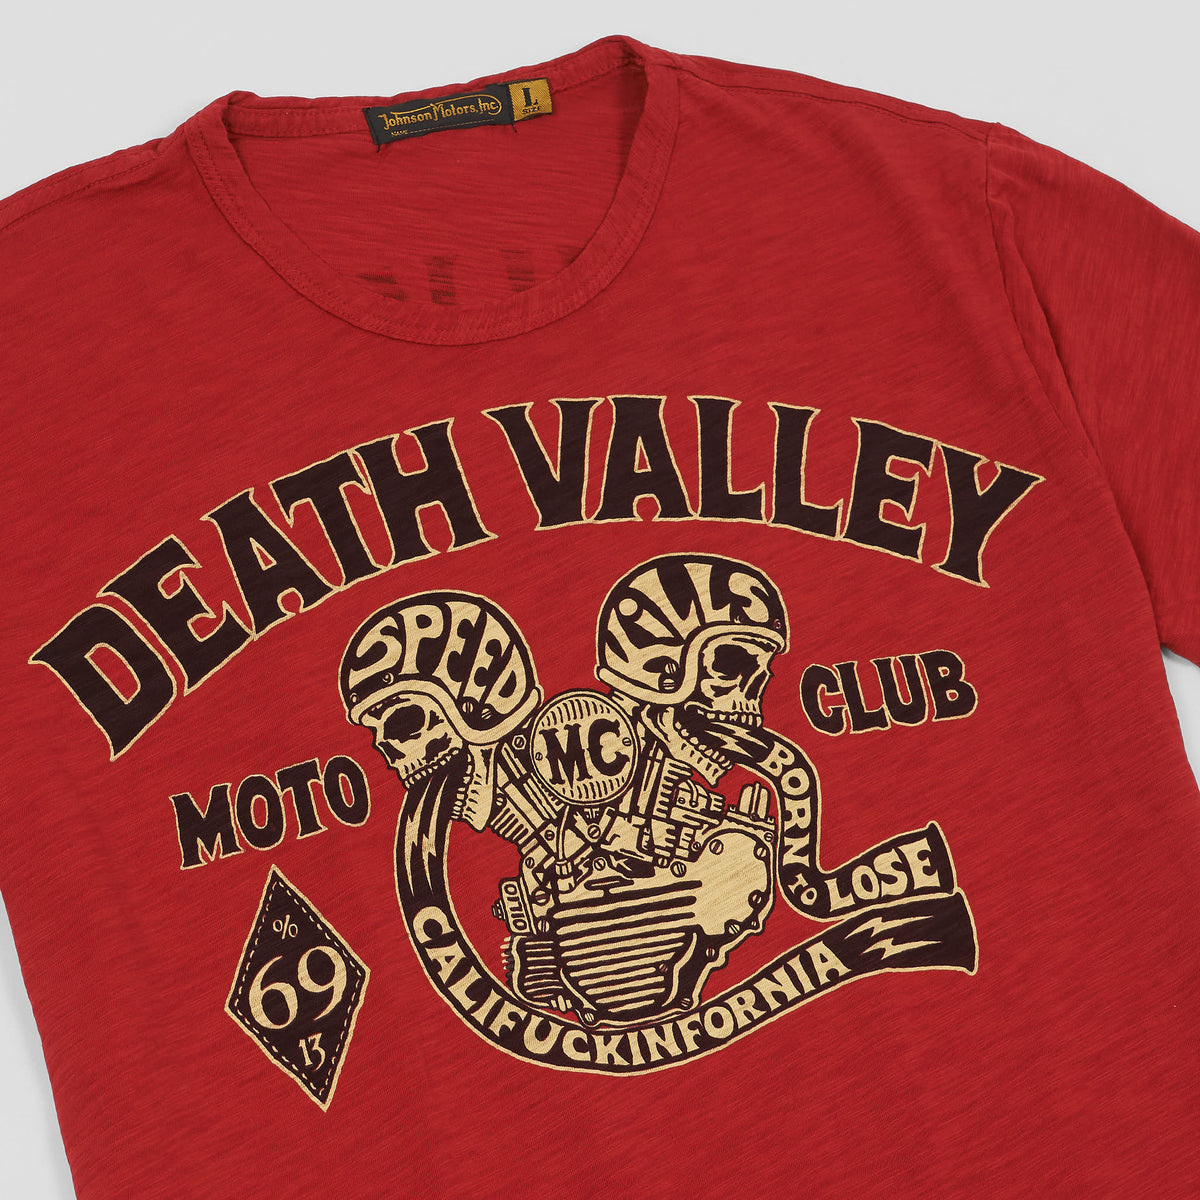 Johnson Motors Inc. Death Valley Moto Club